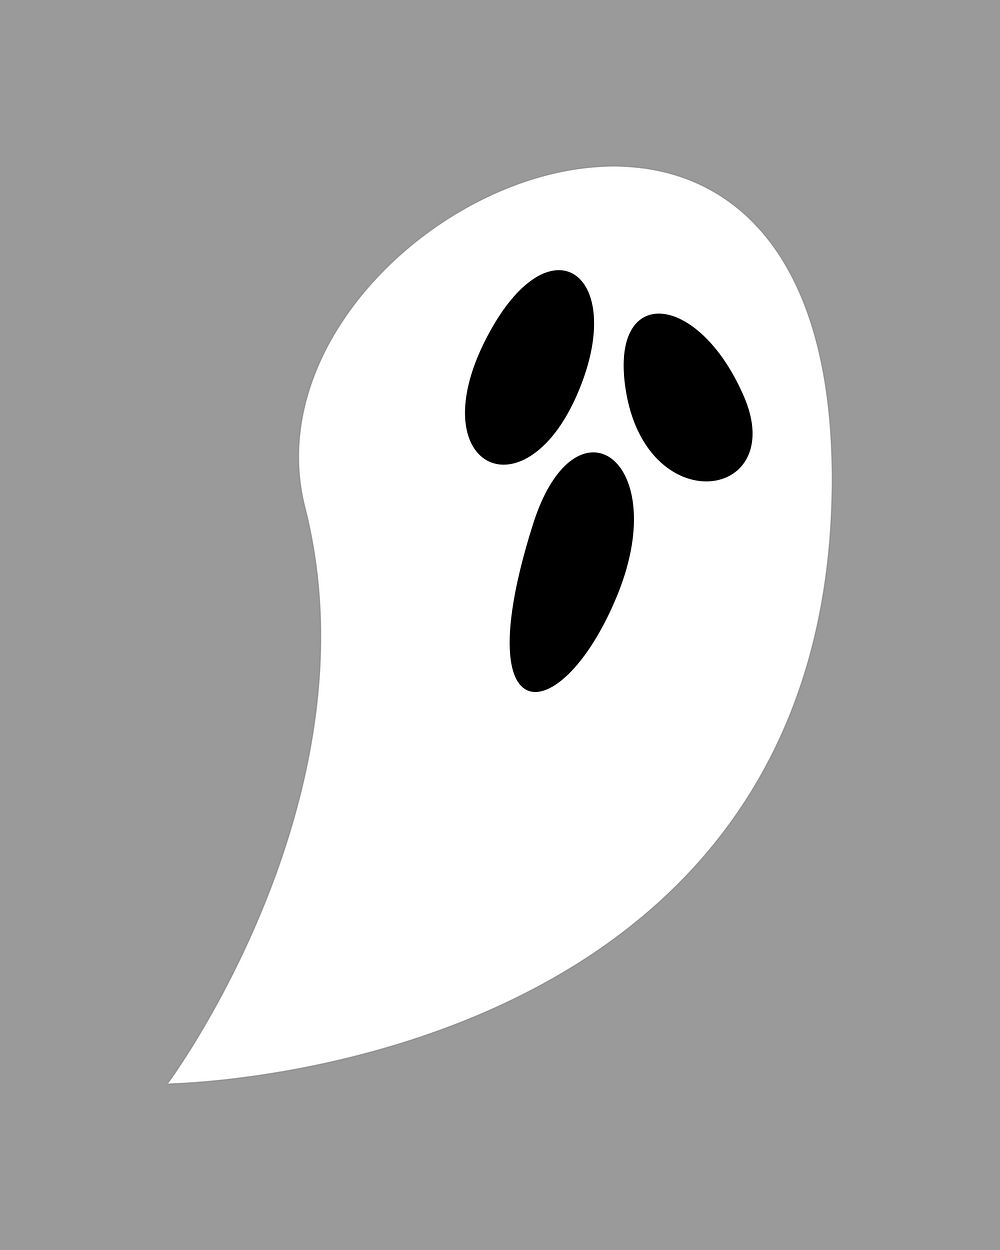 Ghost Halloween illustration. Free public domain CC0 image.